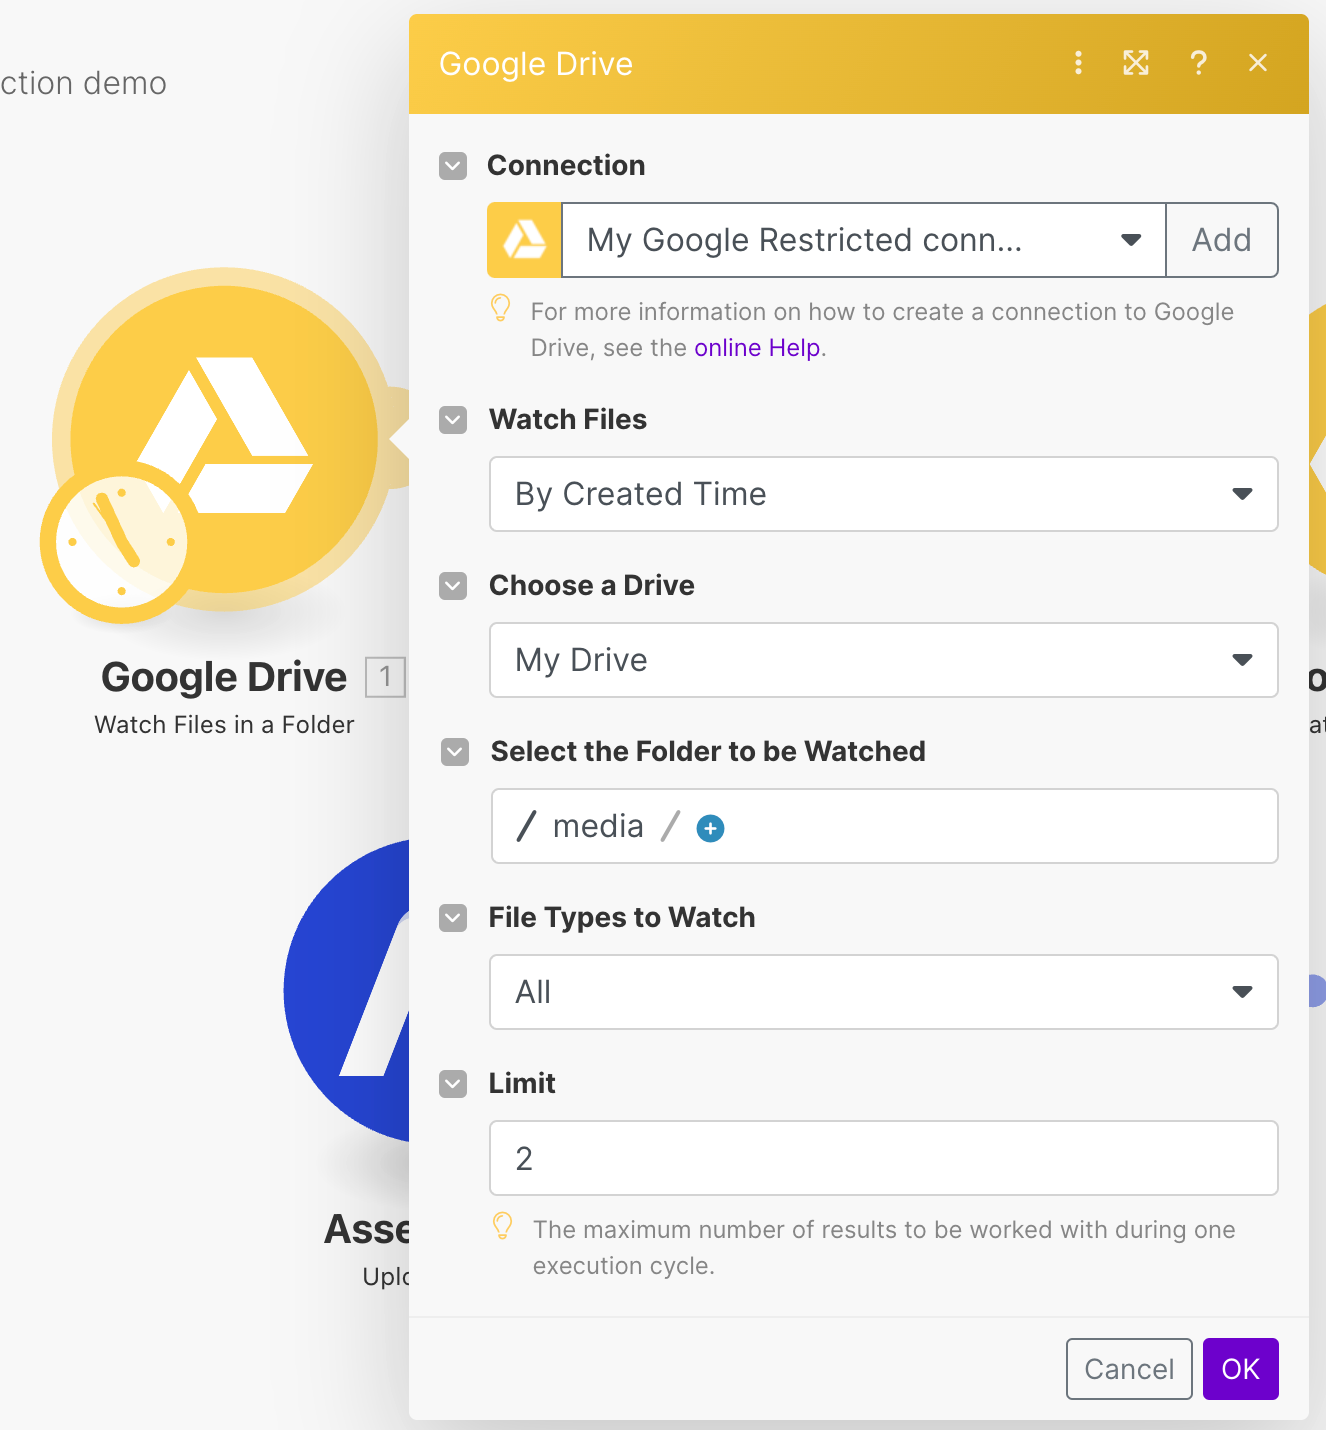 Configure Google Drive Watch Files in a Folder module